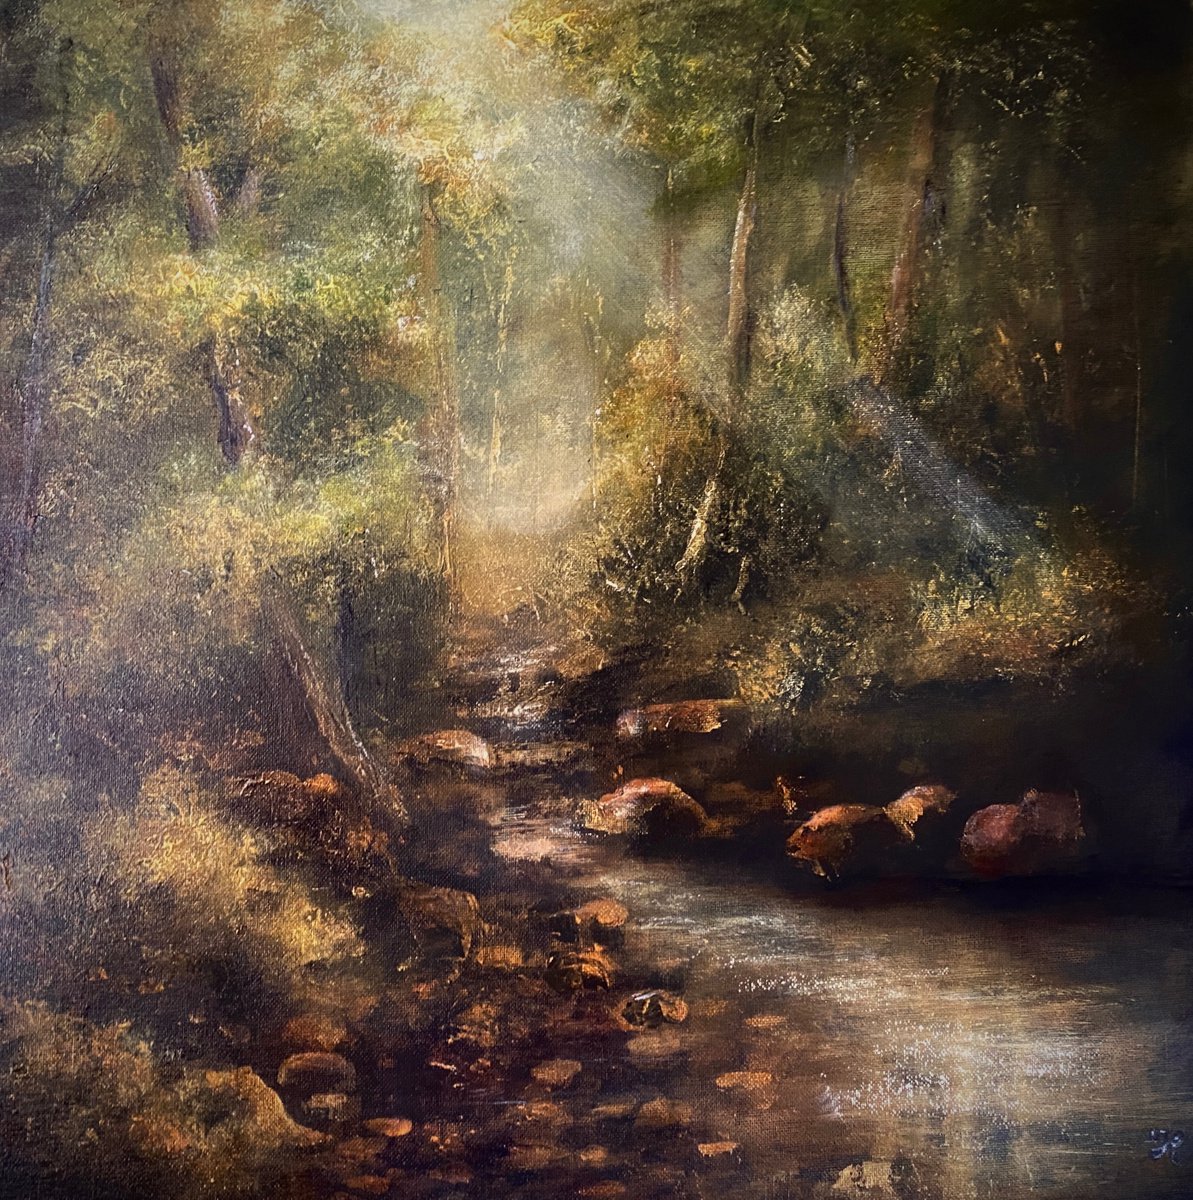 Forest interior - The pond by Heidi Irene Kainulainen